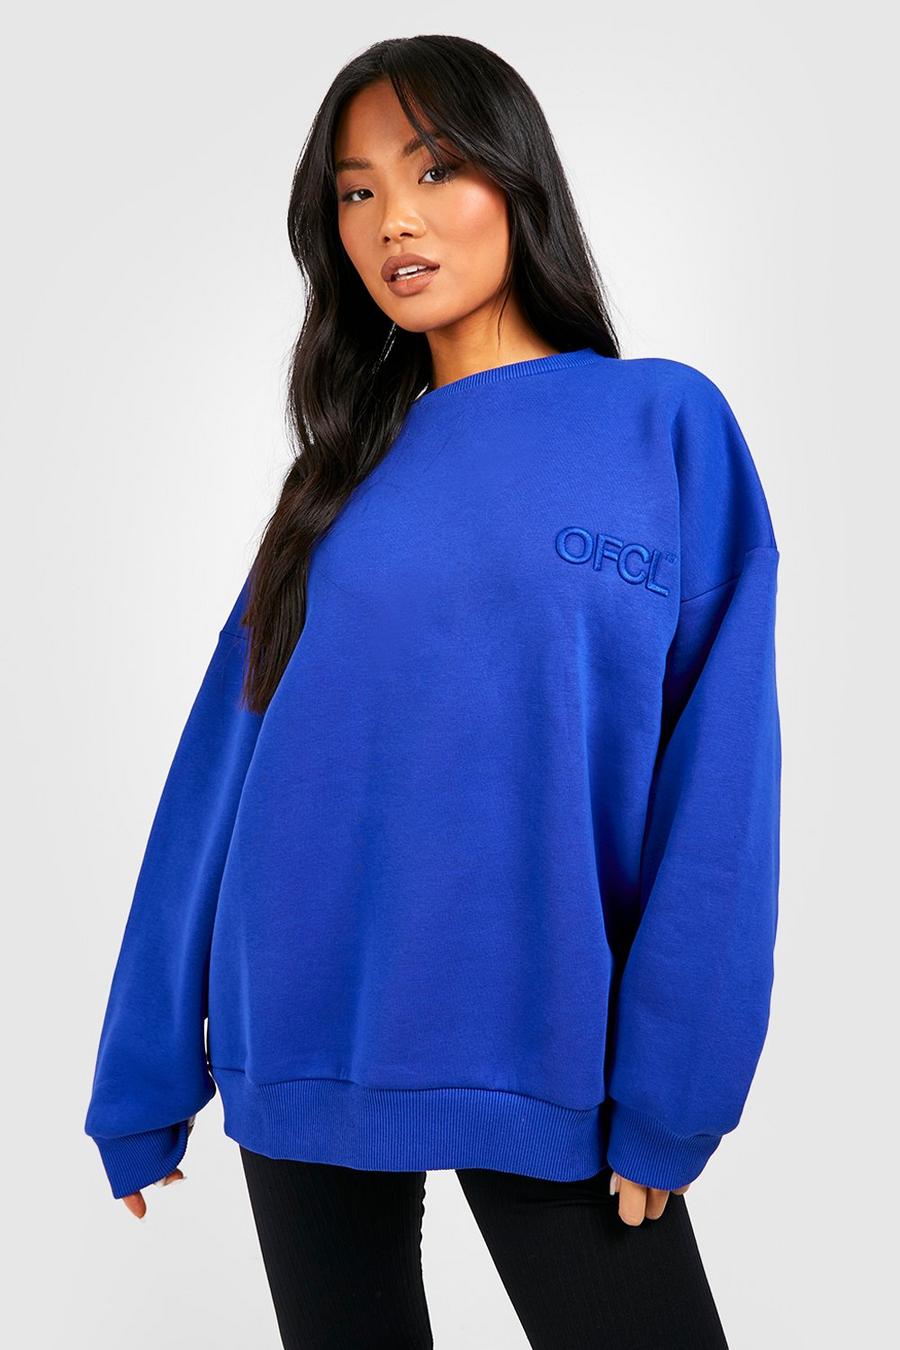 Cobalt blue Petite Ofcl Embroidered Sweatshirt